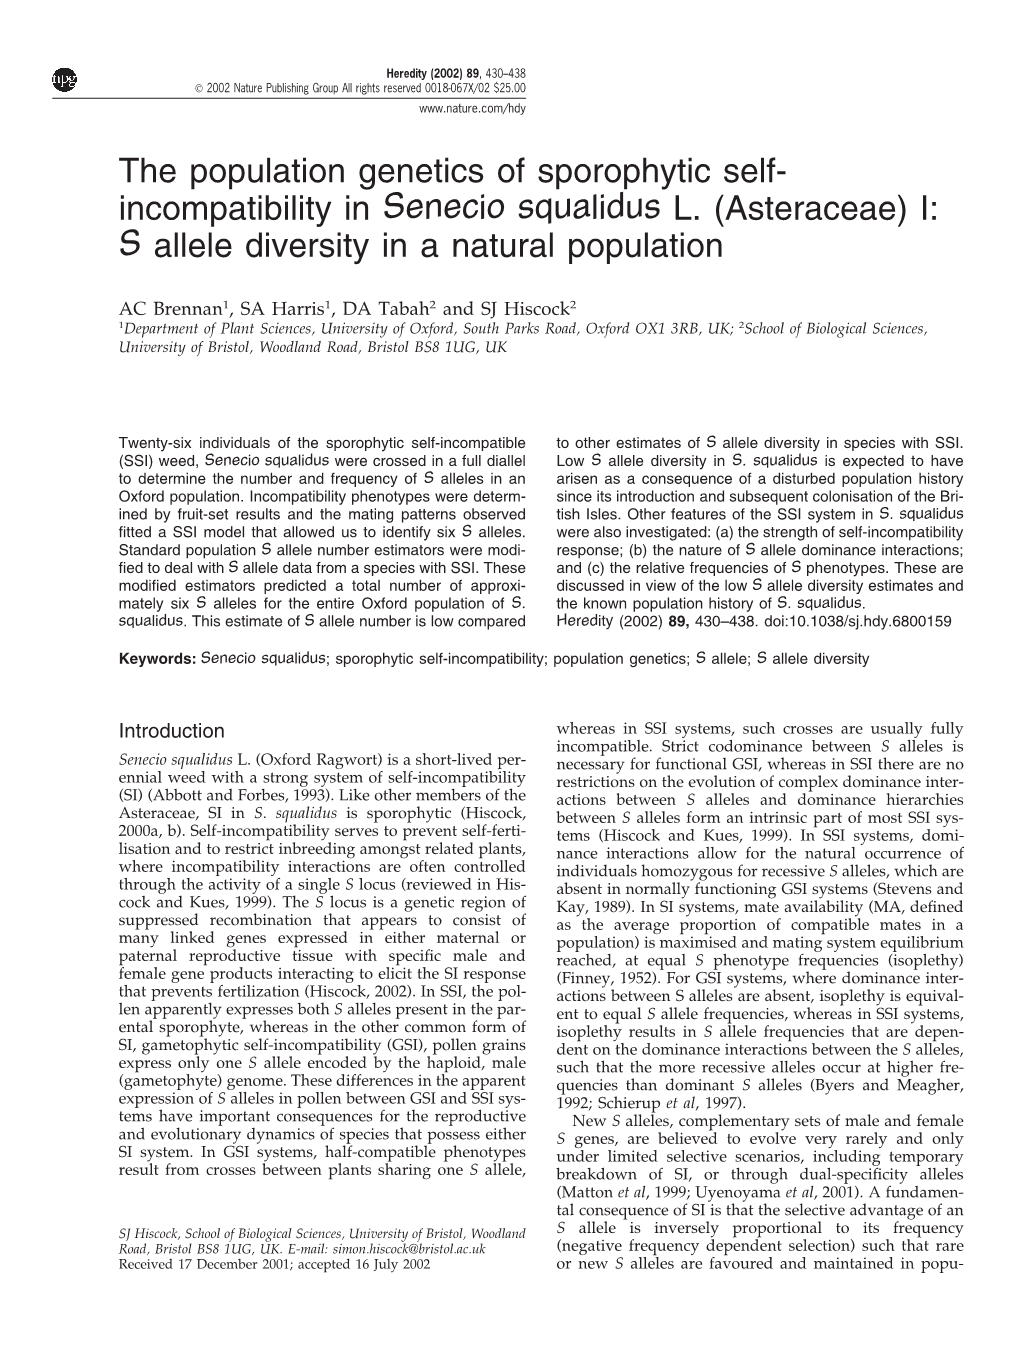 The Population Genetics of Sporophytic Self- Incompatibility in Senecio Squalidus L